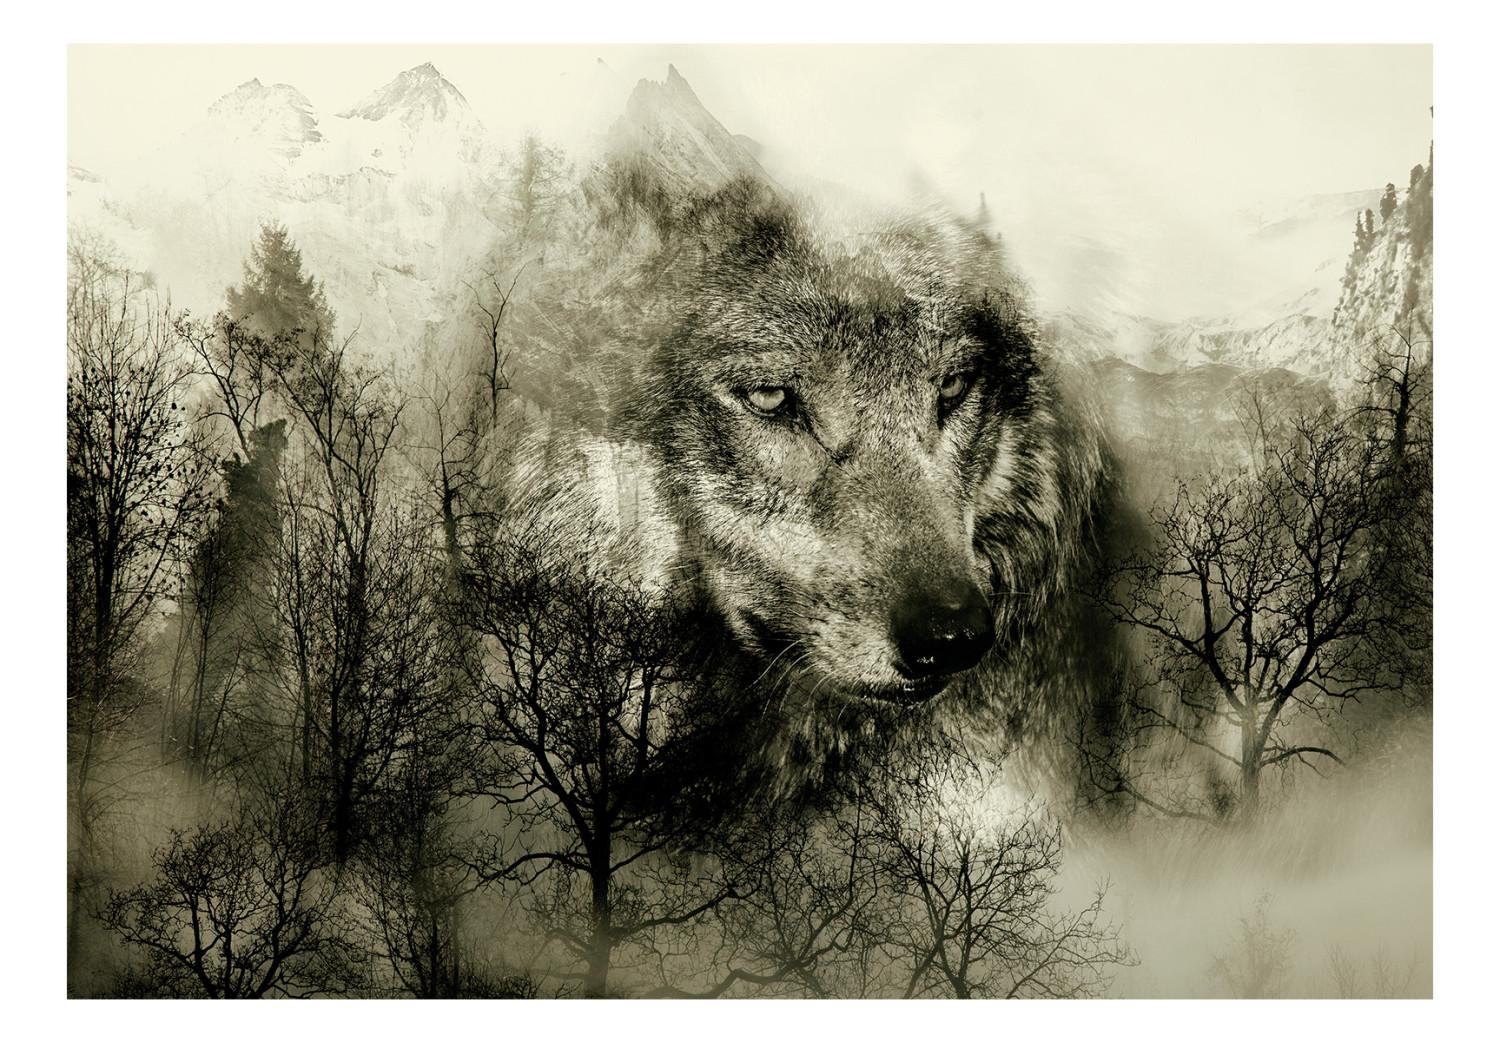 Fotomural a medida Depredador de montañas - lobo en bosque montañoso